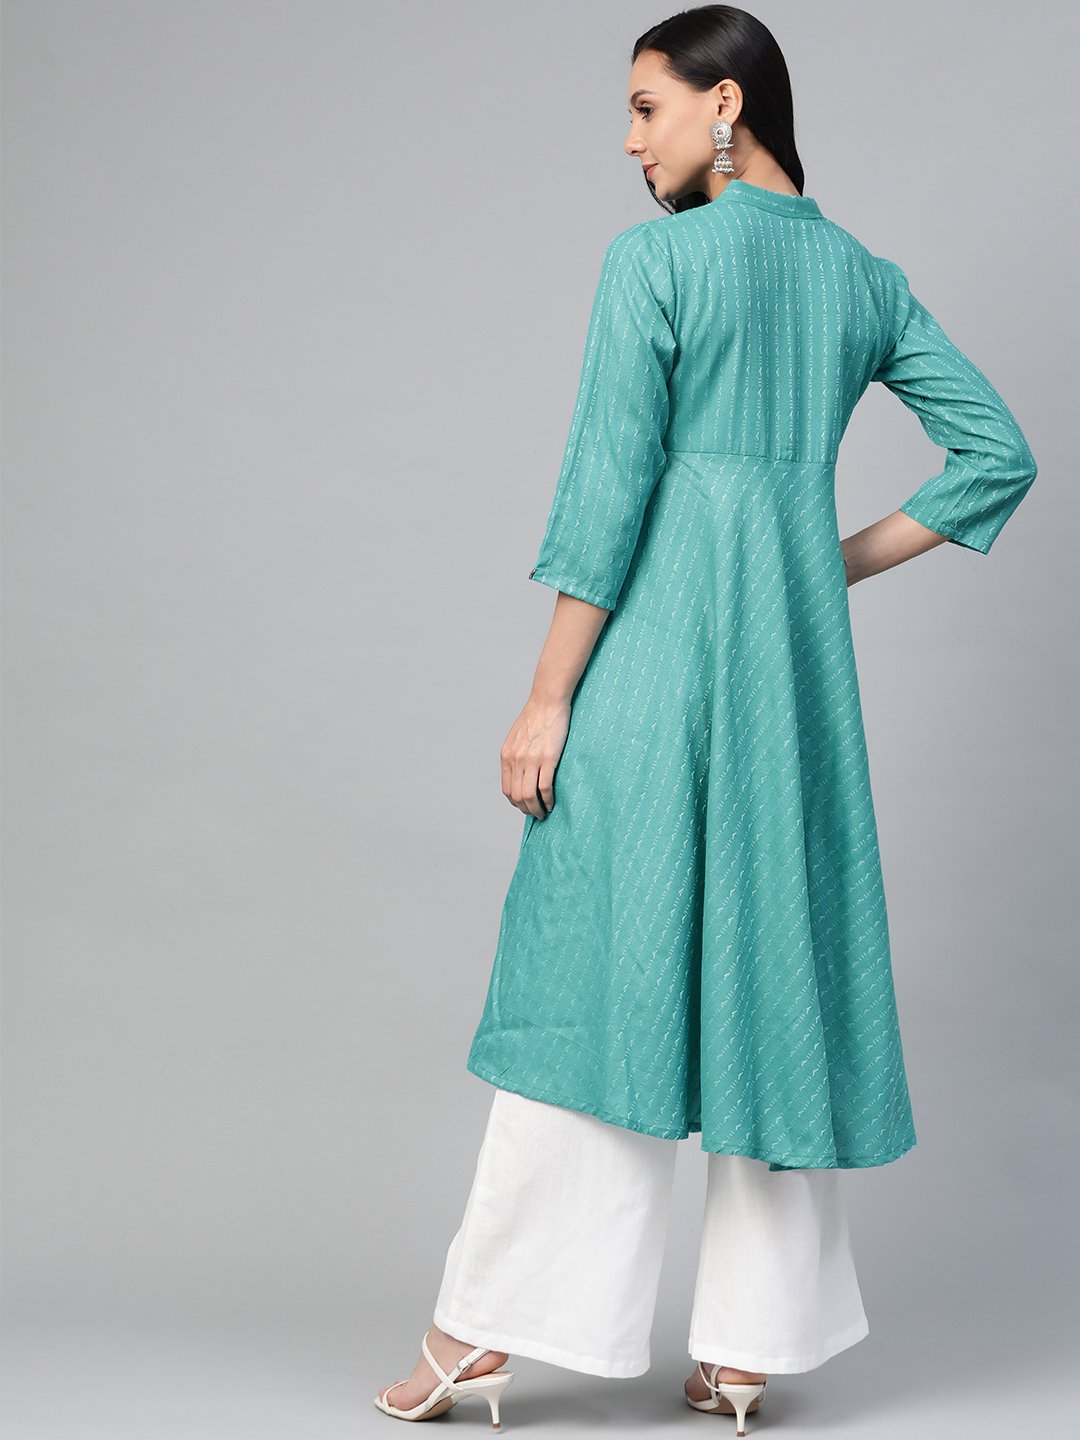 Women's Green & White Woven Design Jacquard A Line Kurta - Jompers